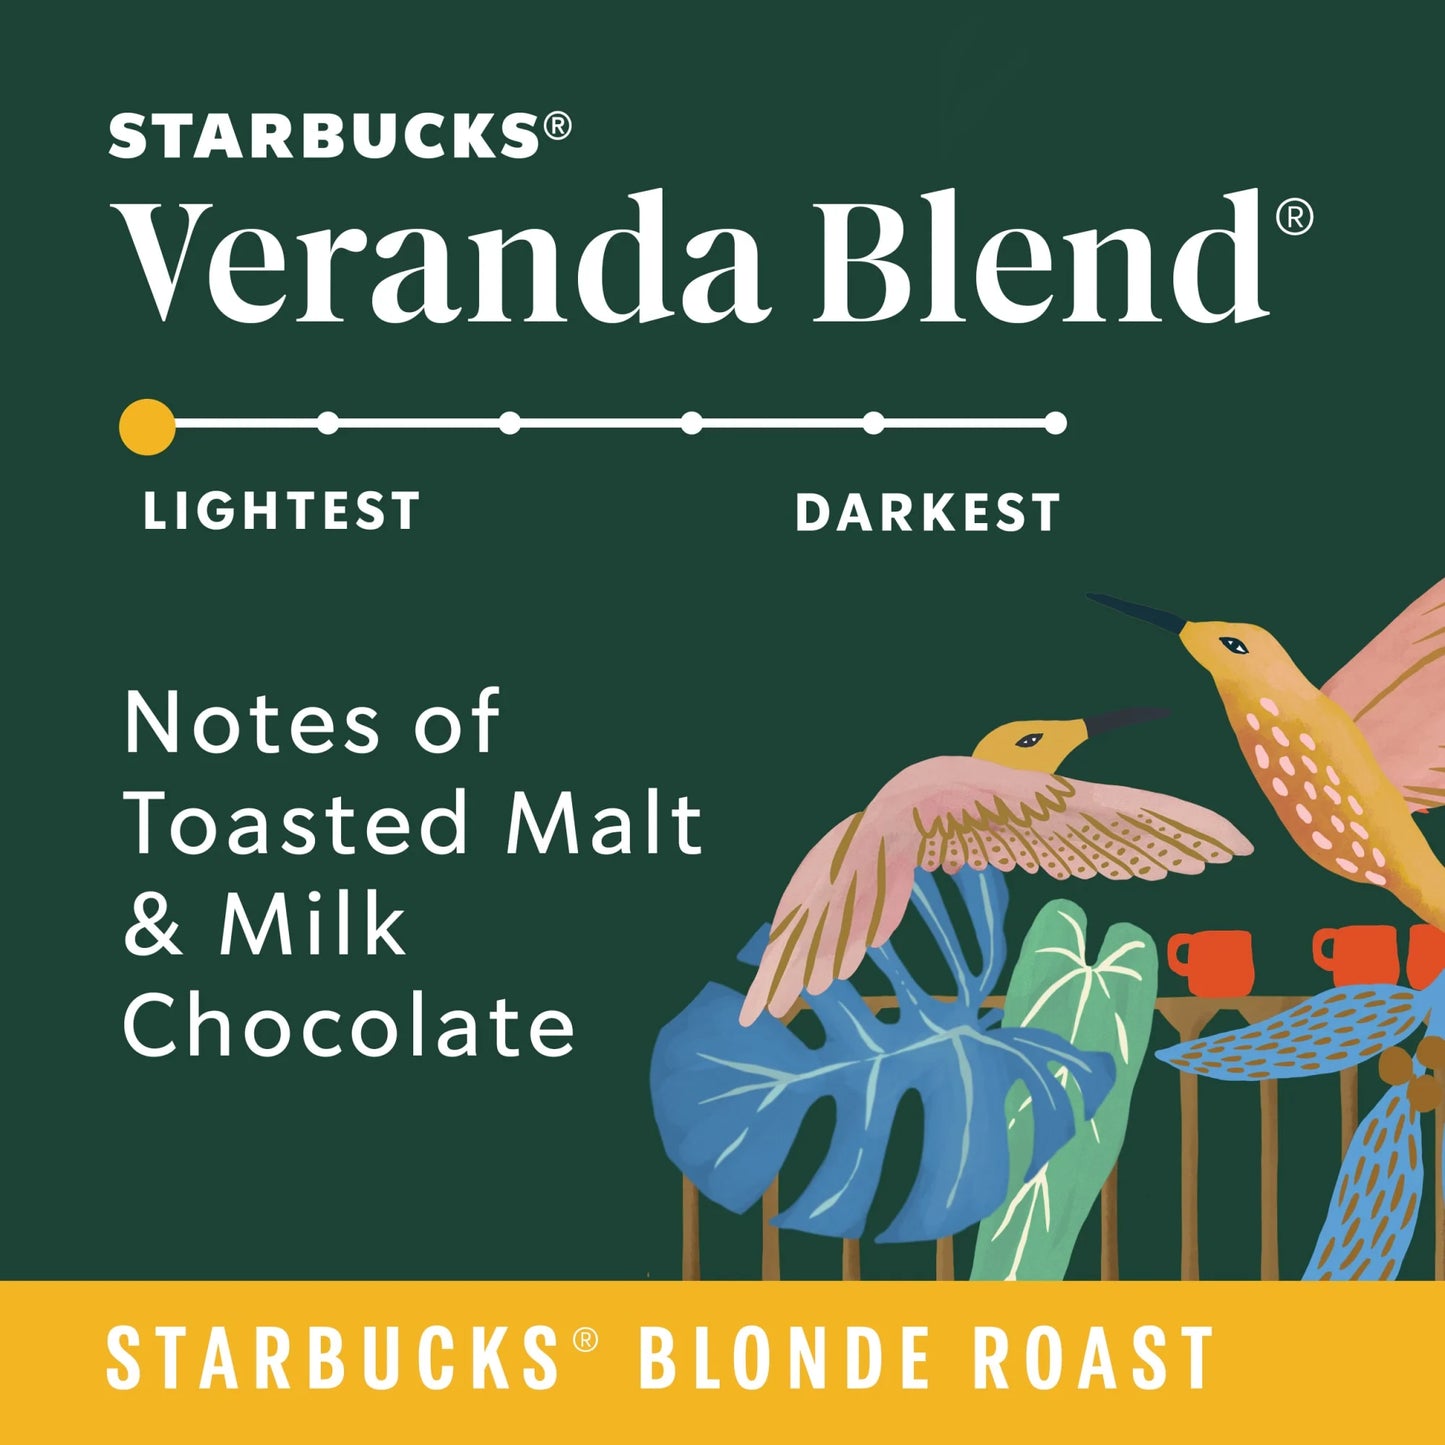 , Veranda Blend Blonde Roast K-Cup Coffee Pods, 44 Count K Cups